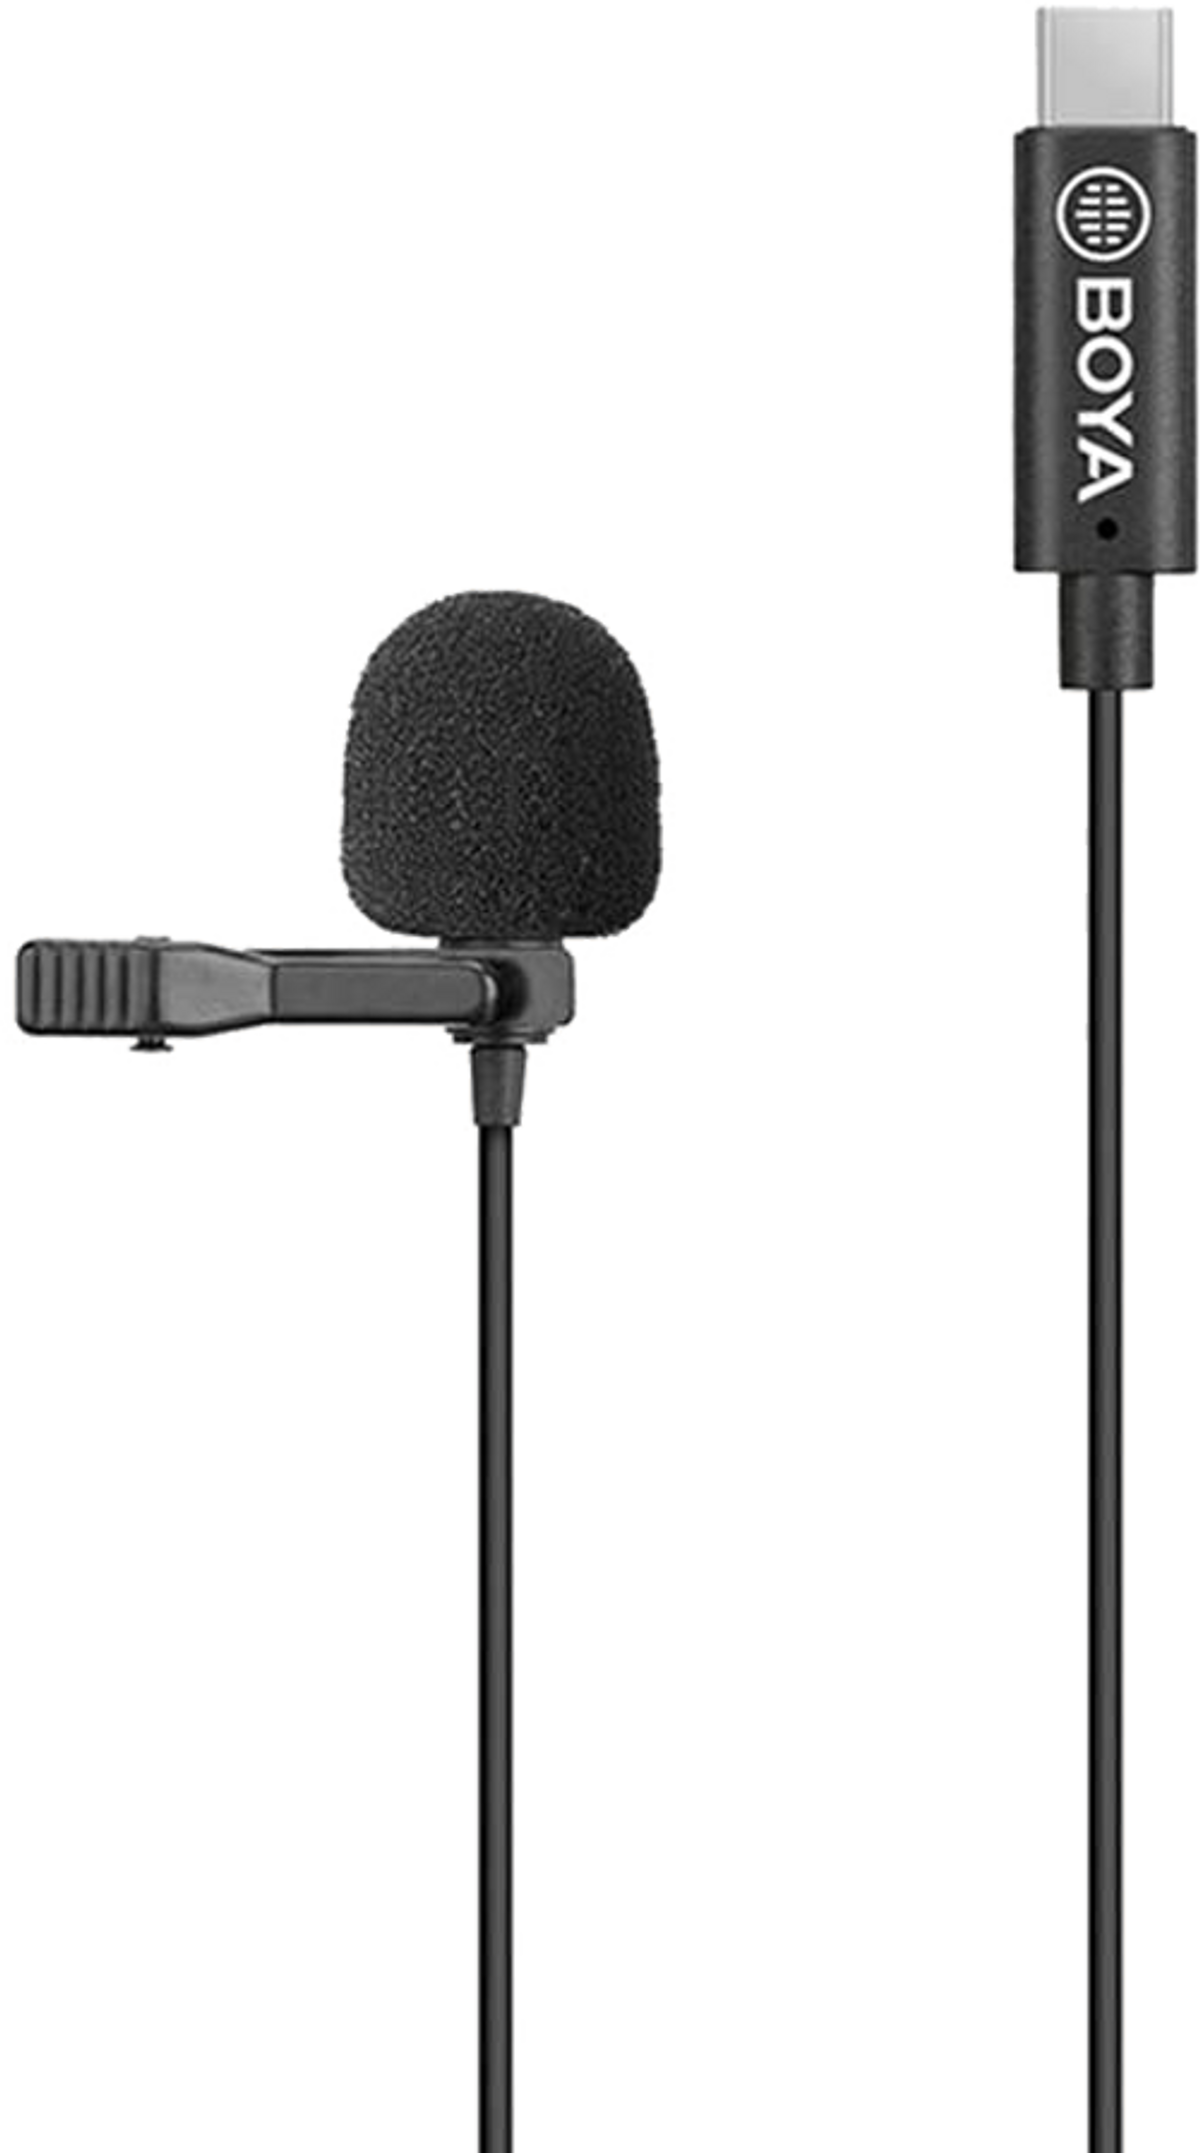 CLATRONIC BOYA BY-M3 schwarz Ansteckmikrofon Mikrofon